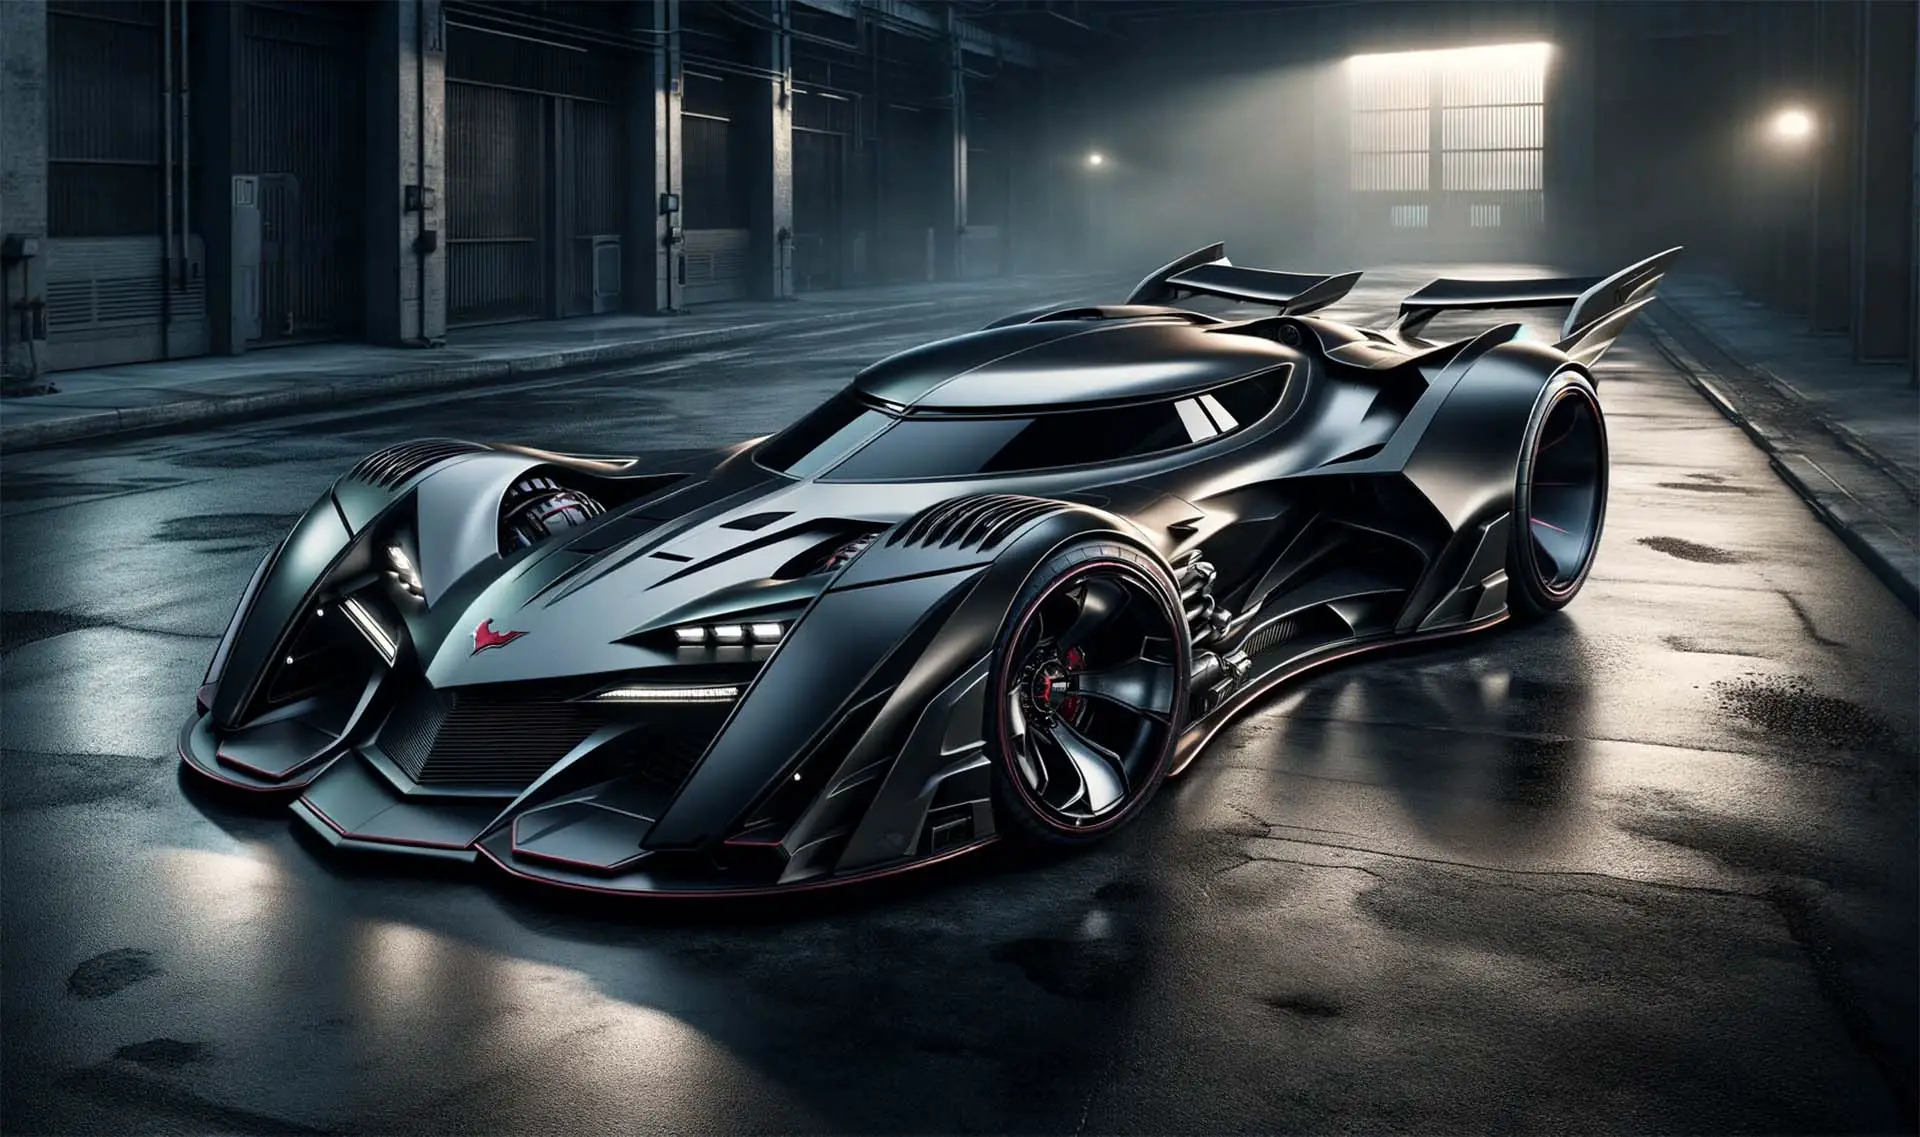 A_sports_car_styled_Batmobile_blending_futuristic_and_classic_design_elements.